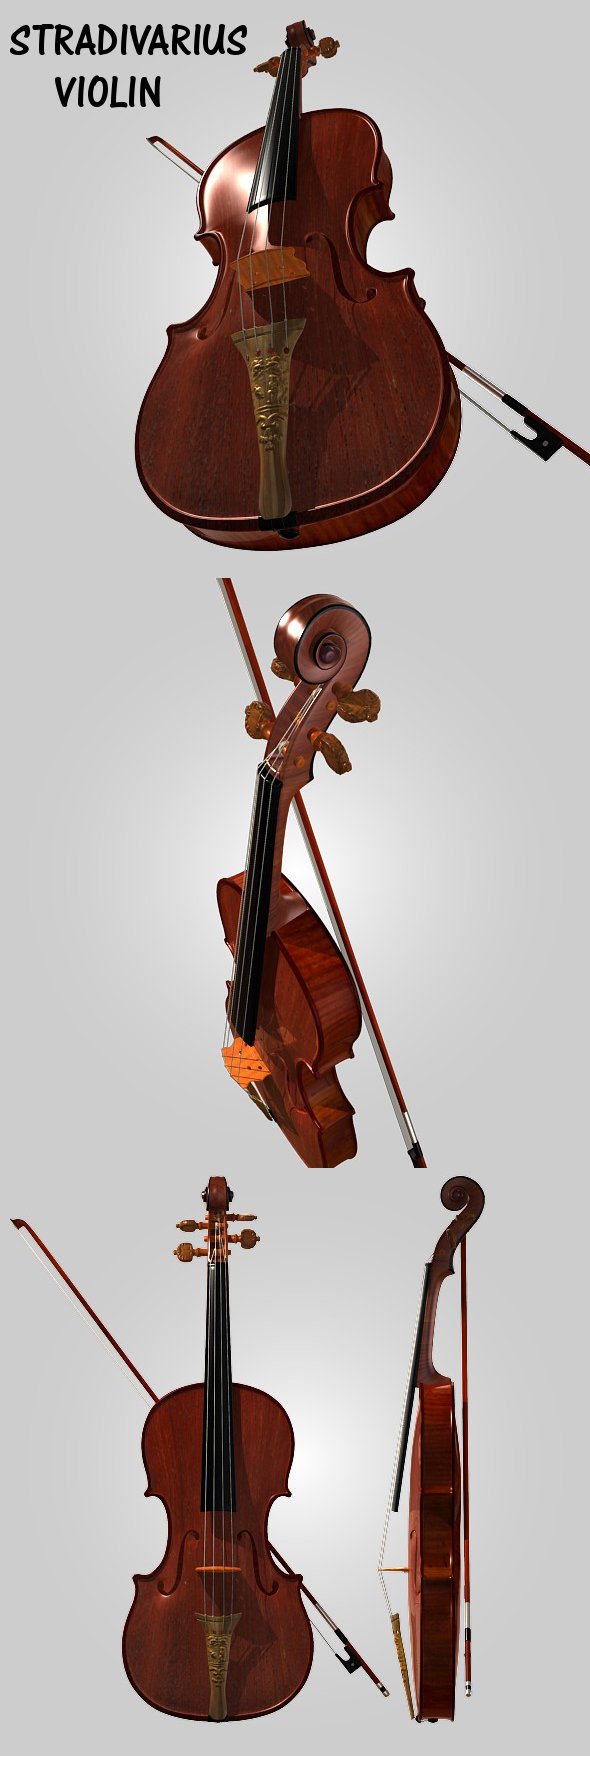 Stradivarius violin - 3Docean 109041